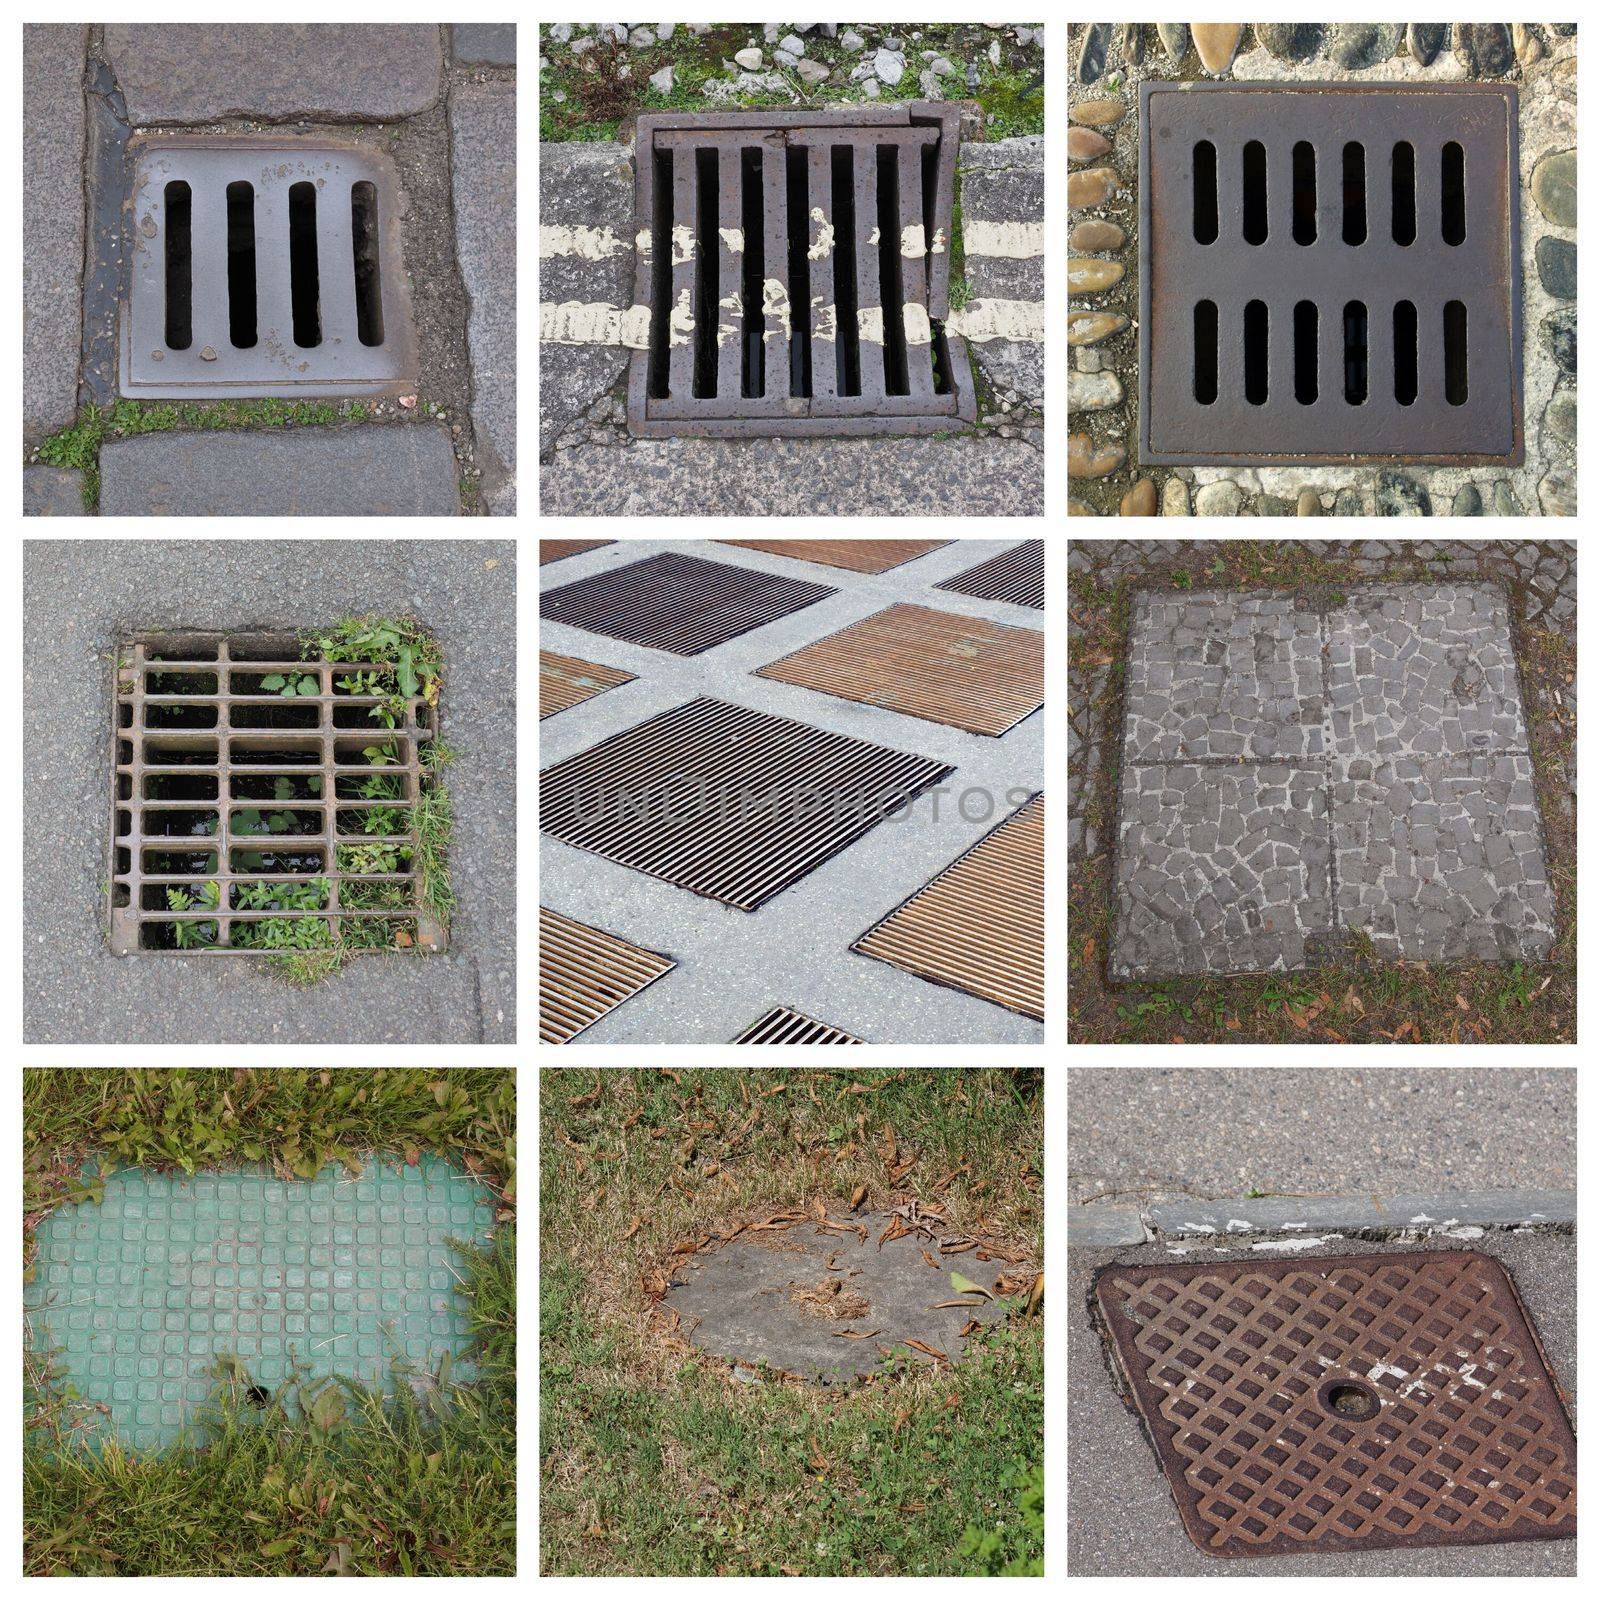 nine drains collage by claudiodivizia